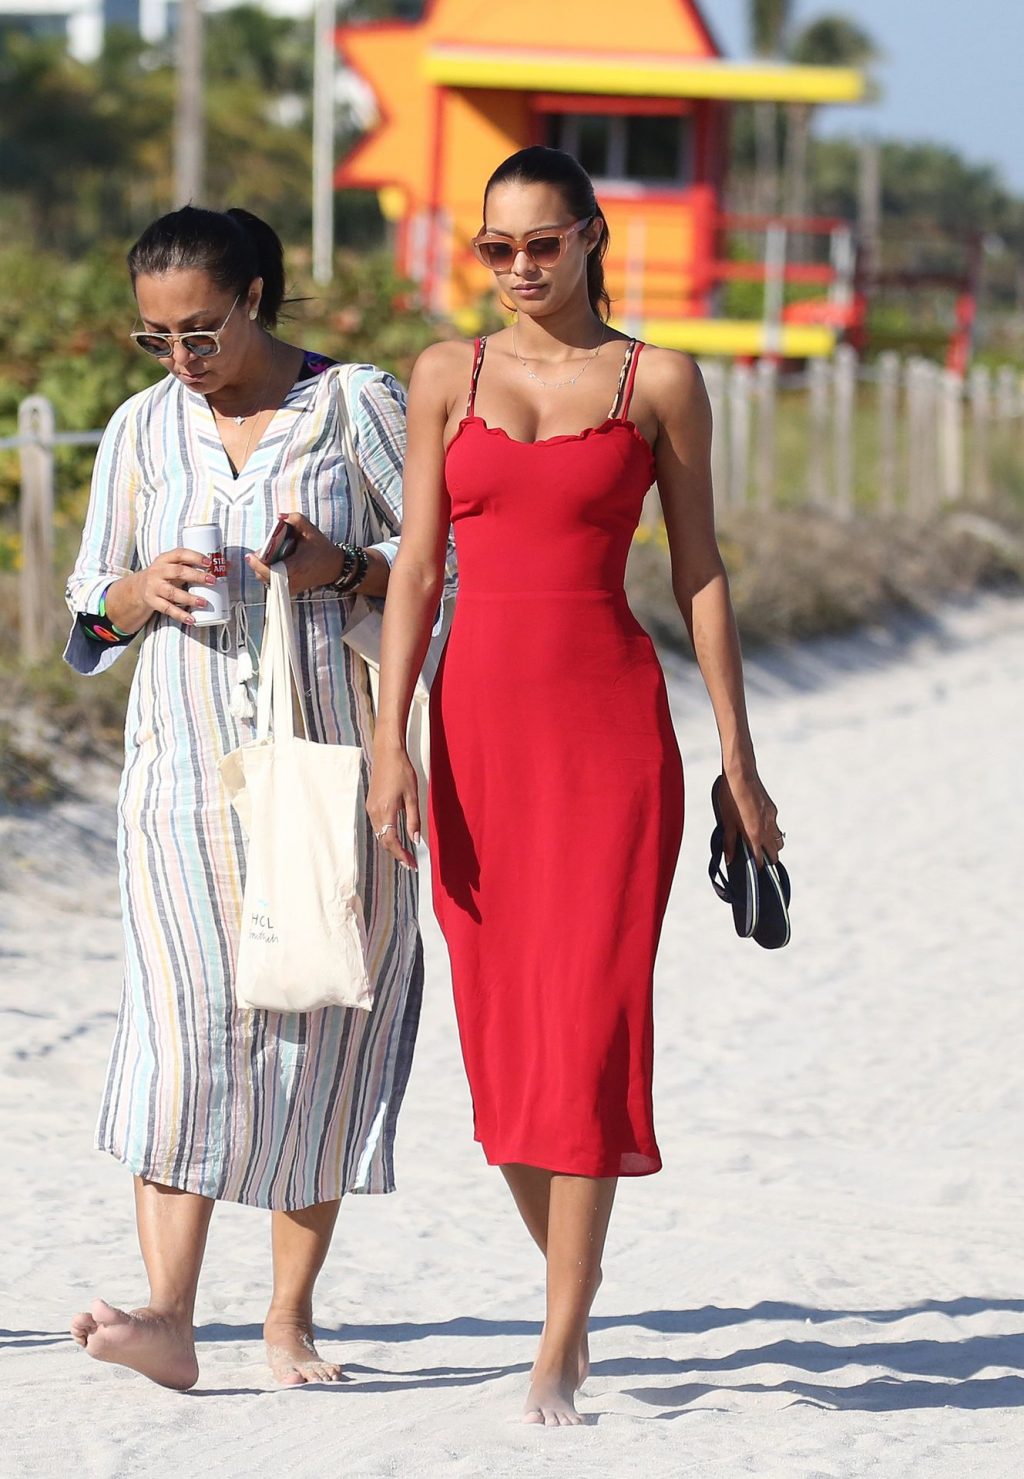 Candice Swanepoel &amp; Lais Ribeiro Both Wear Tiny Leopard Print Bikinis on the Beach in Miami (69 Photos)